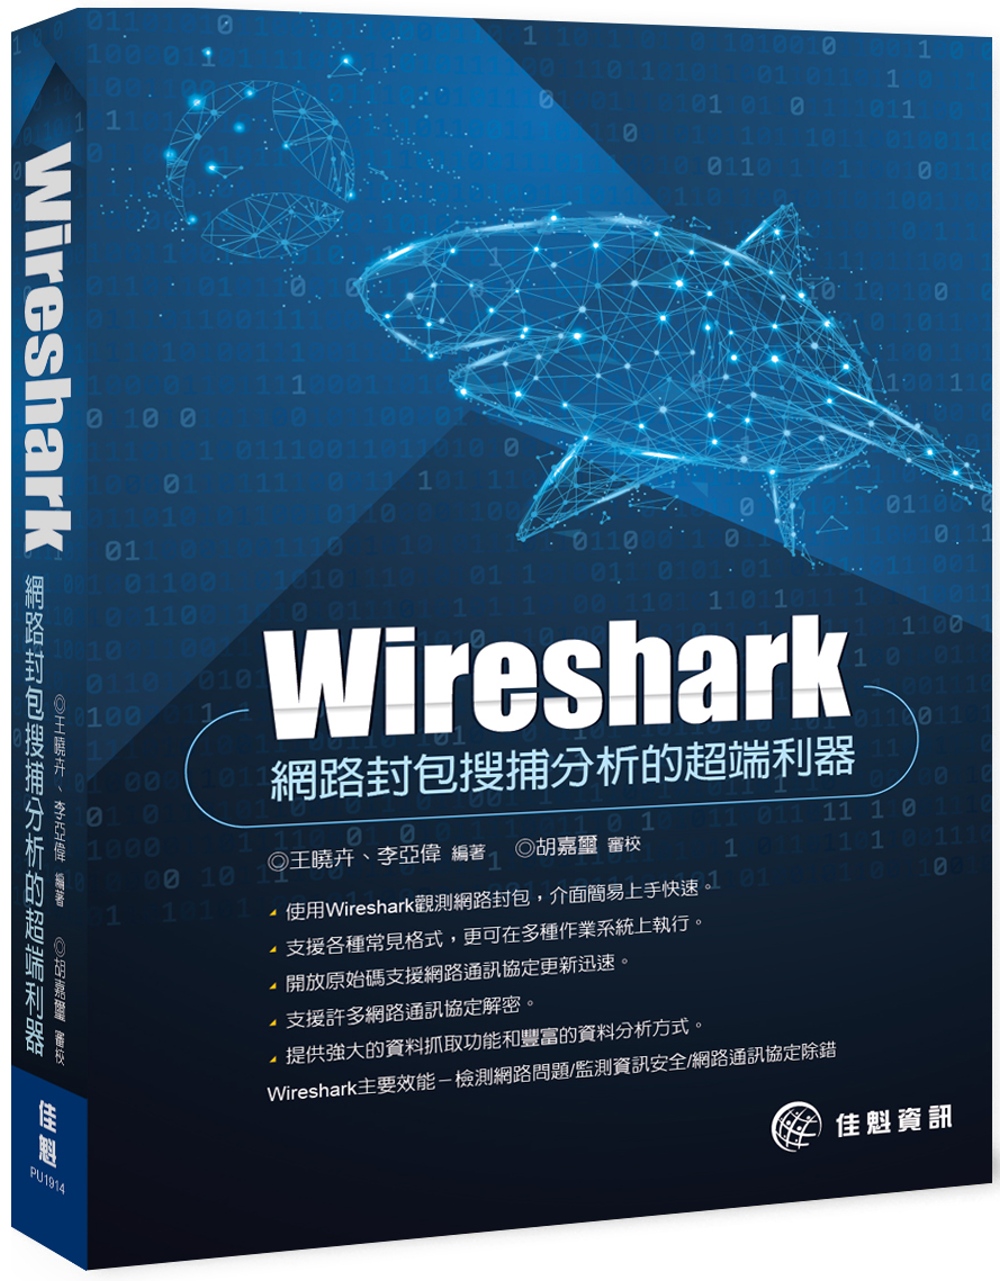 Wireshark：網路封包搜捕分析的超端利器(限台灣)